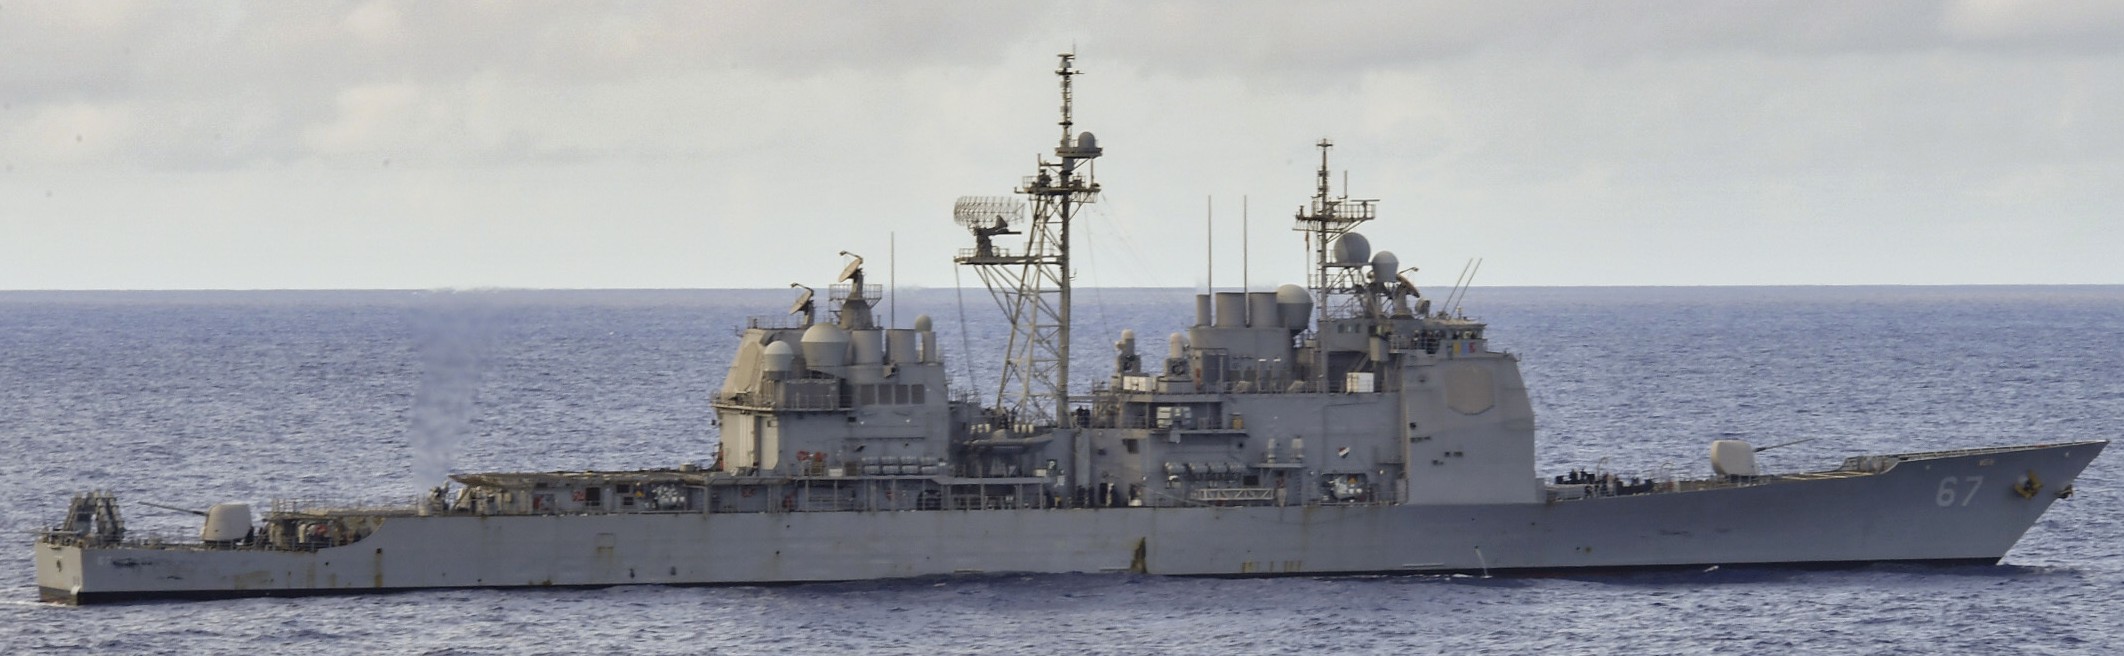 cg-67 uss shiloh ticonderoga class guided missile cruiser aegis us navy 68